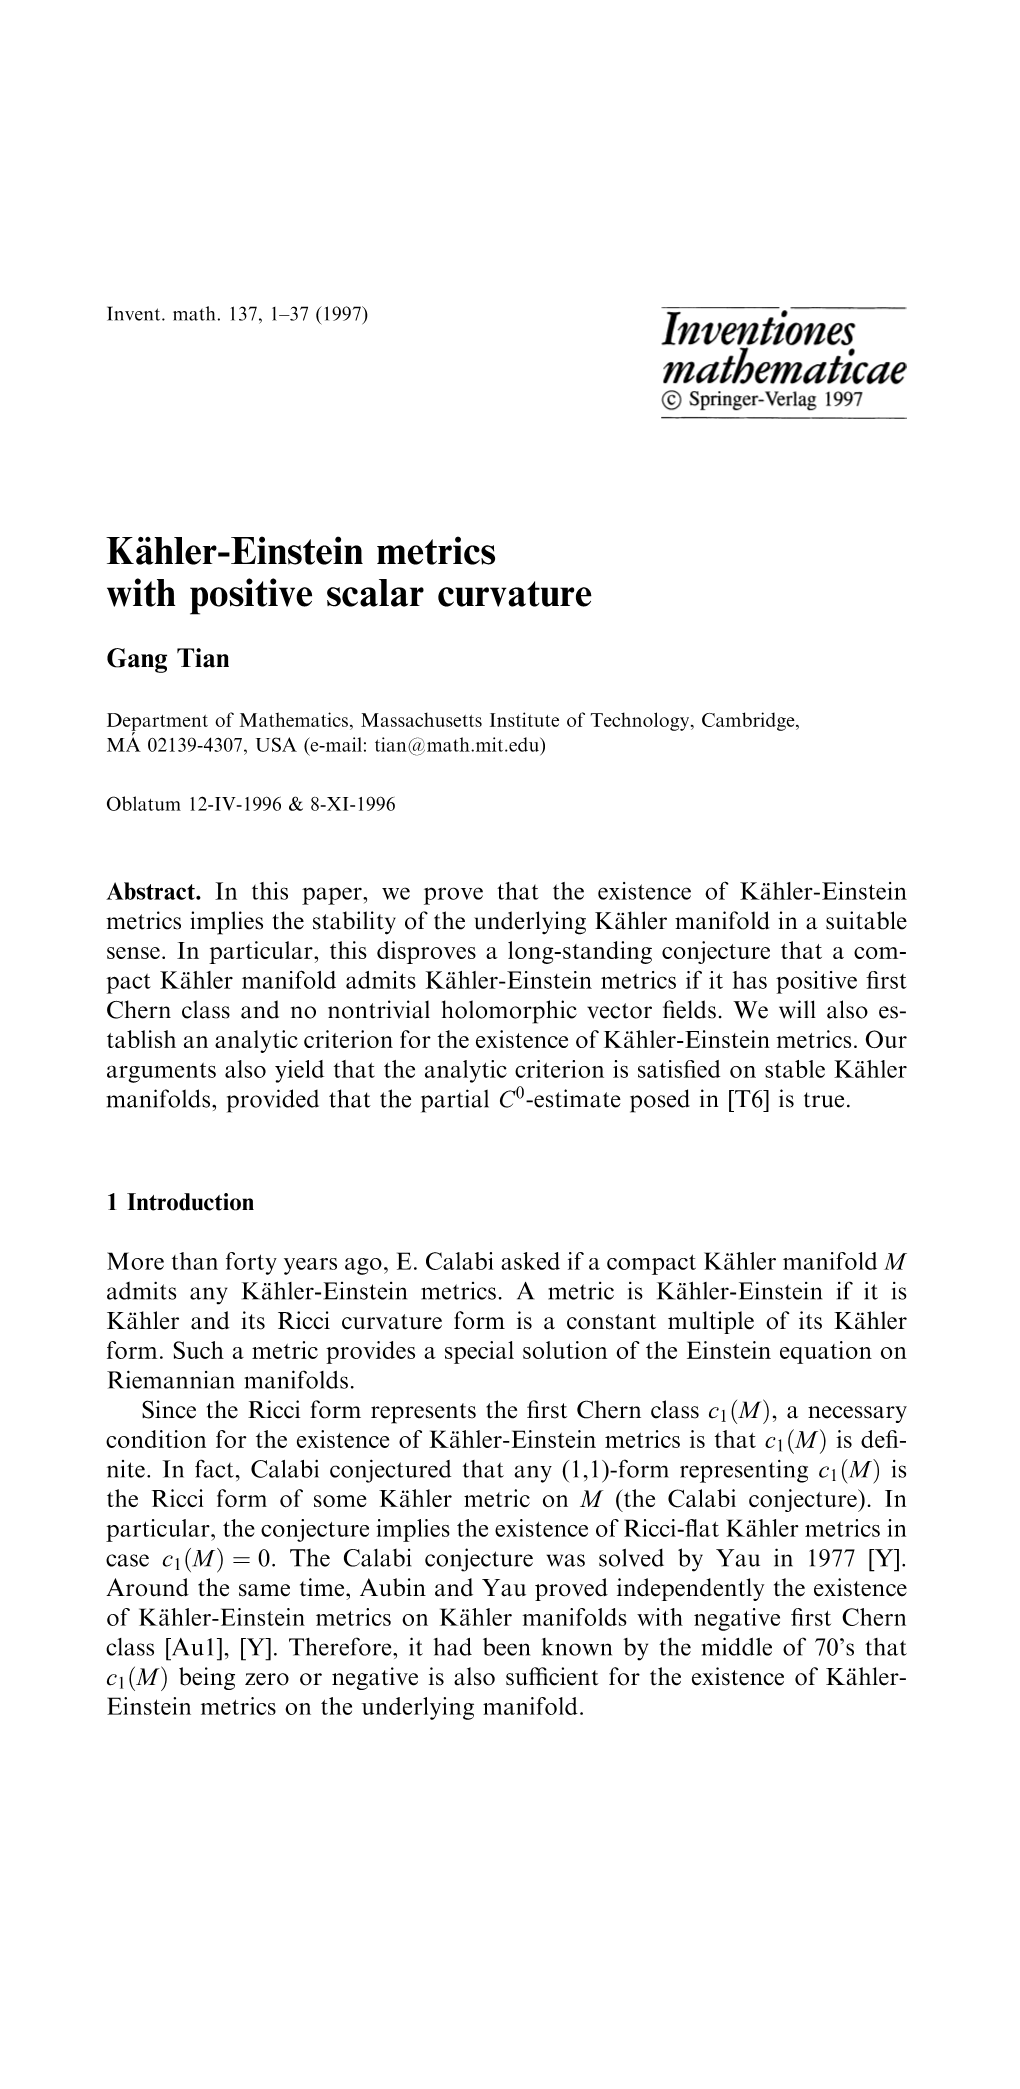 Ka╚Hler-Einstein Metrics with Positive Scalar Curvature